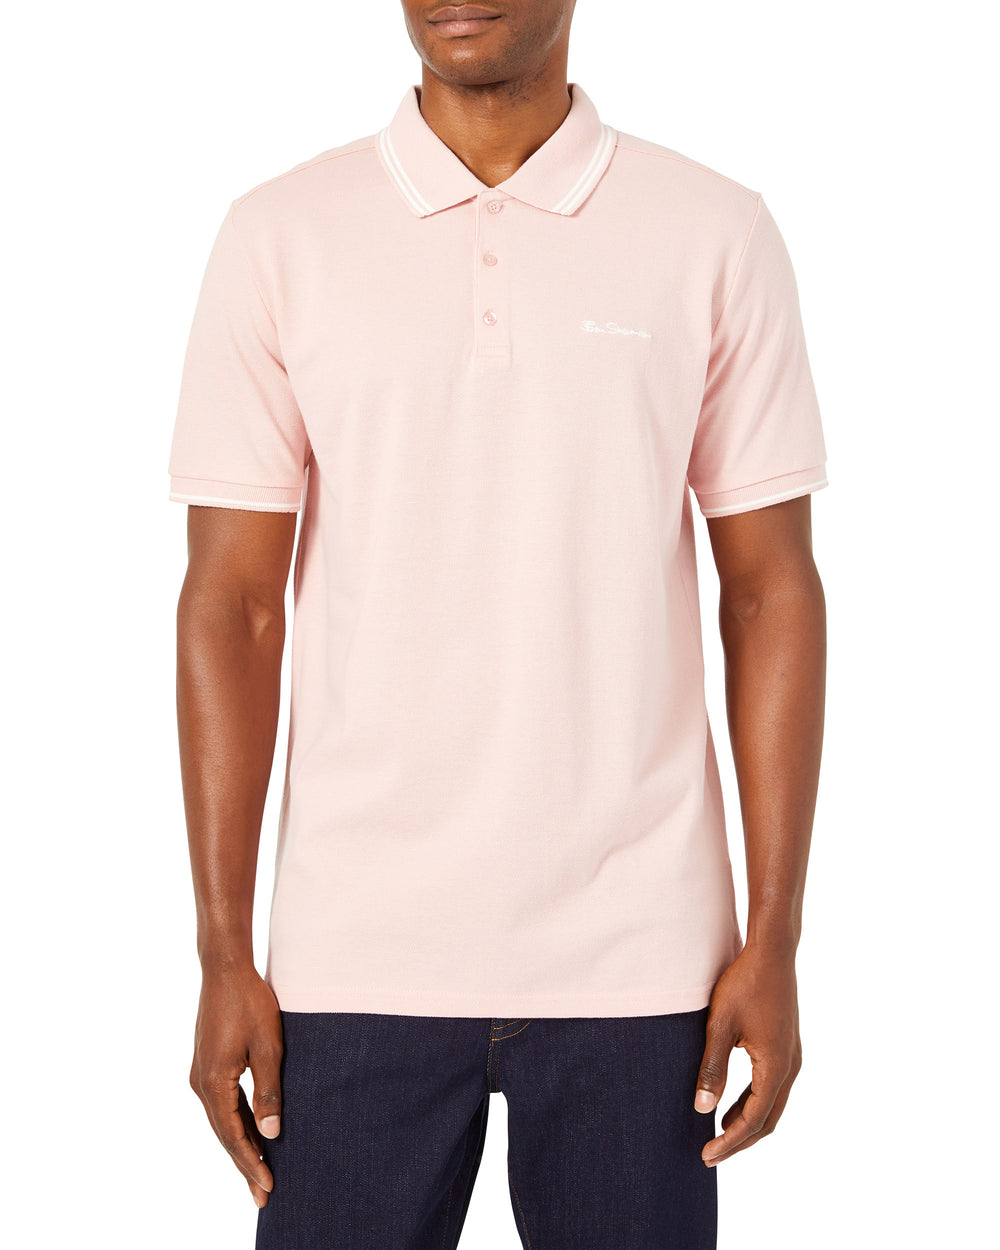 Script Tipped Pique Polo Shirt - Light Pink/White